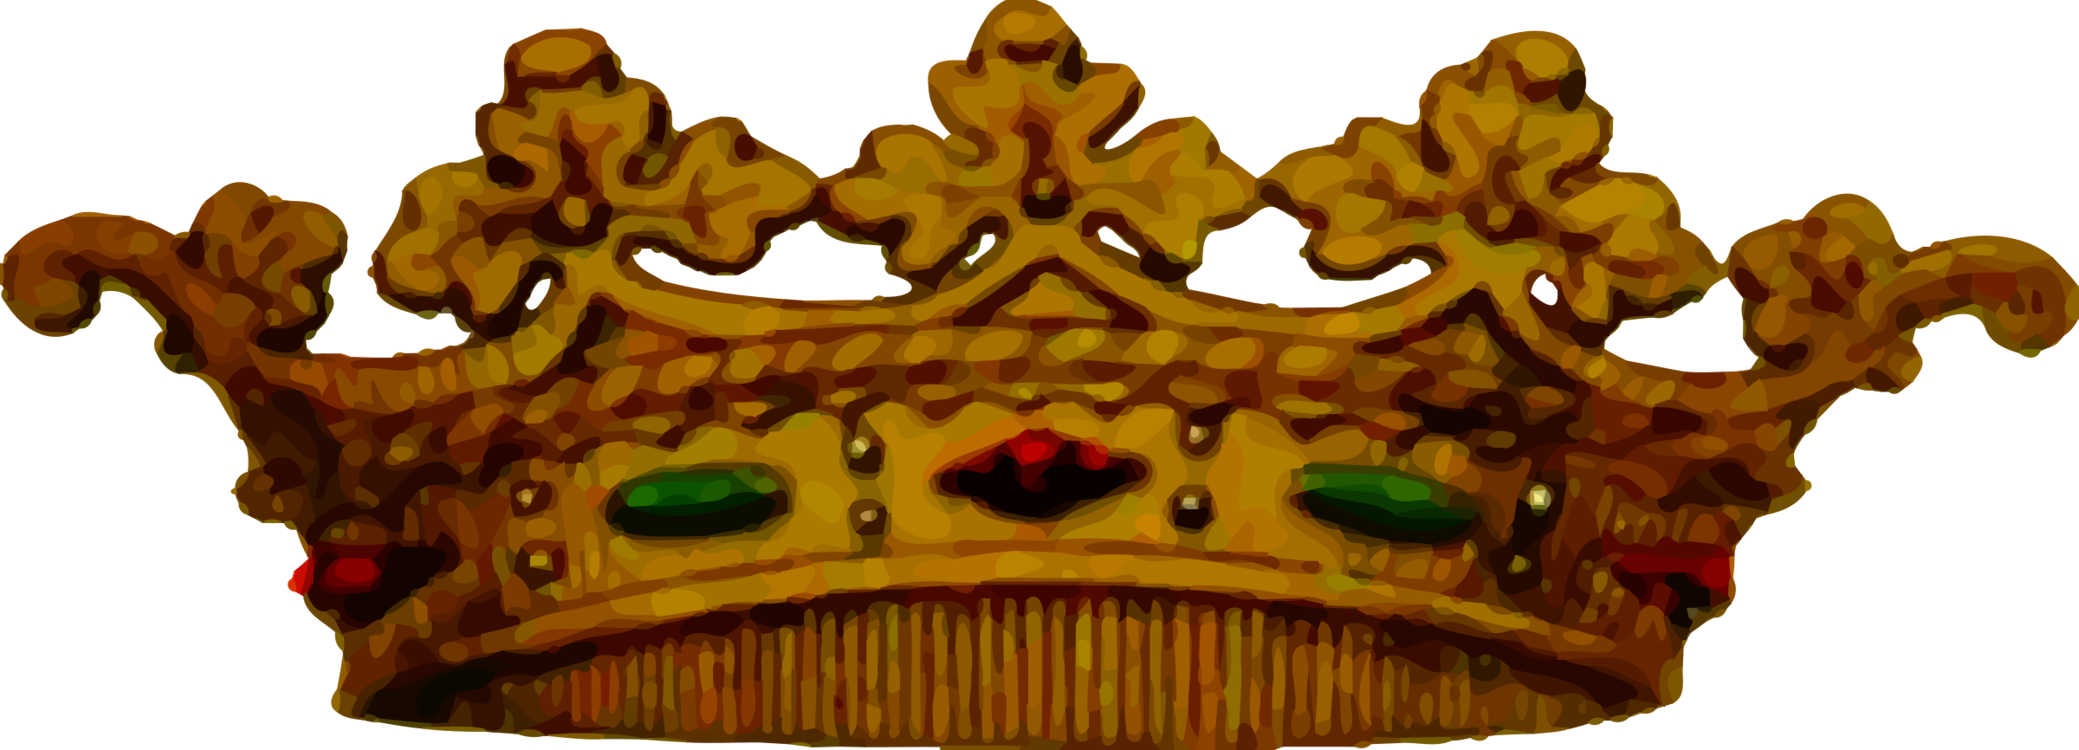 Crown King Jewellery Gemstone Monarch - Reinas Con Frases (2079x750)